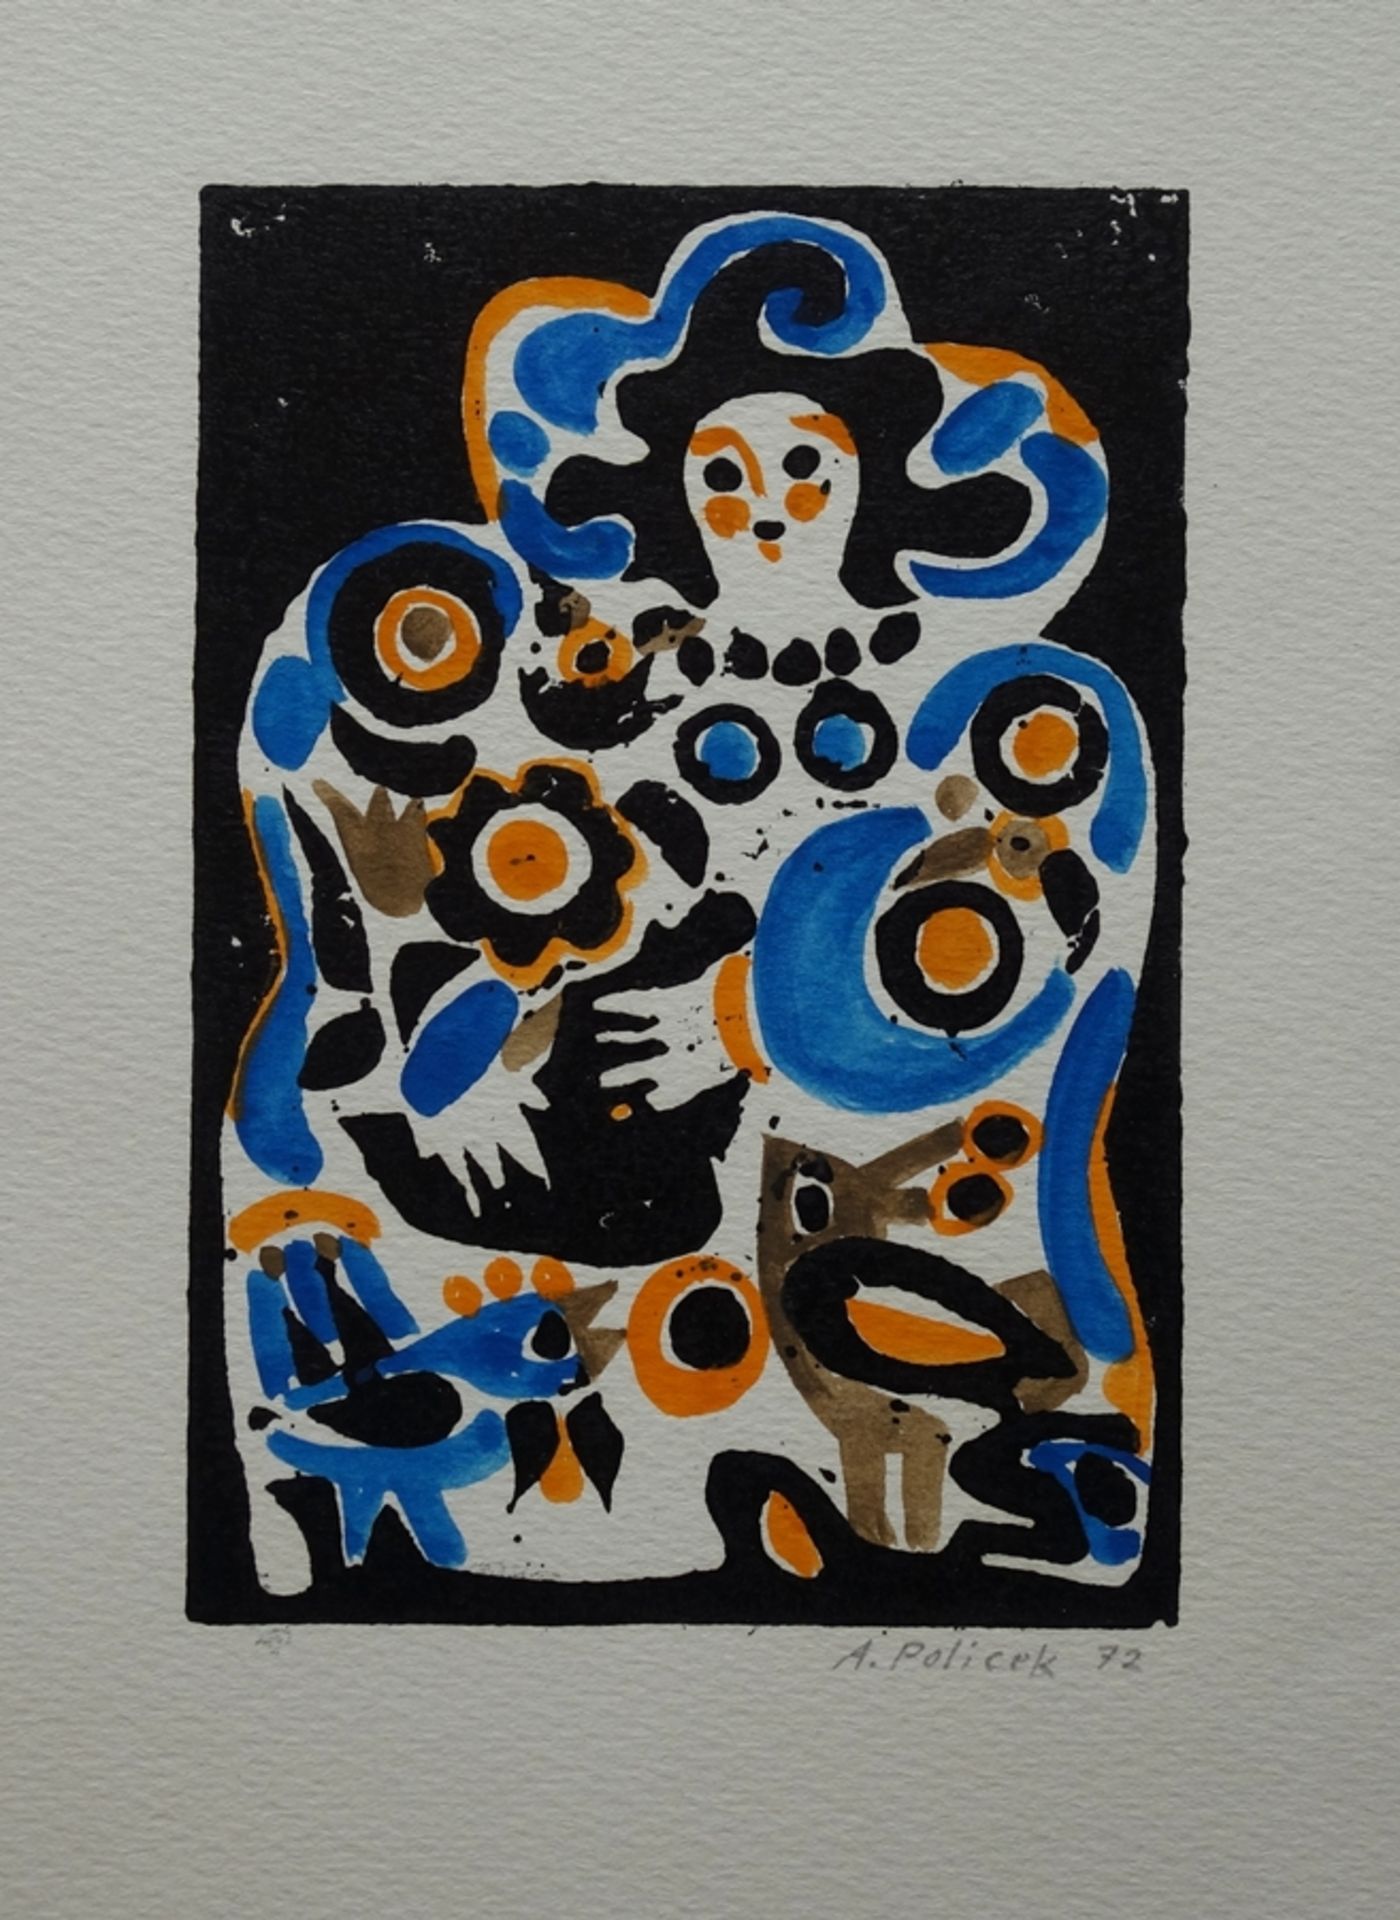 Annedore Policek (*1935, Magdeburg), "Frau mit blauem Vogel", 1972, Linolschnitt/Aquarell